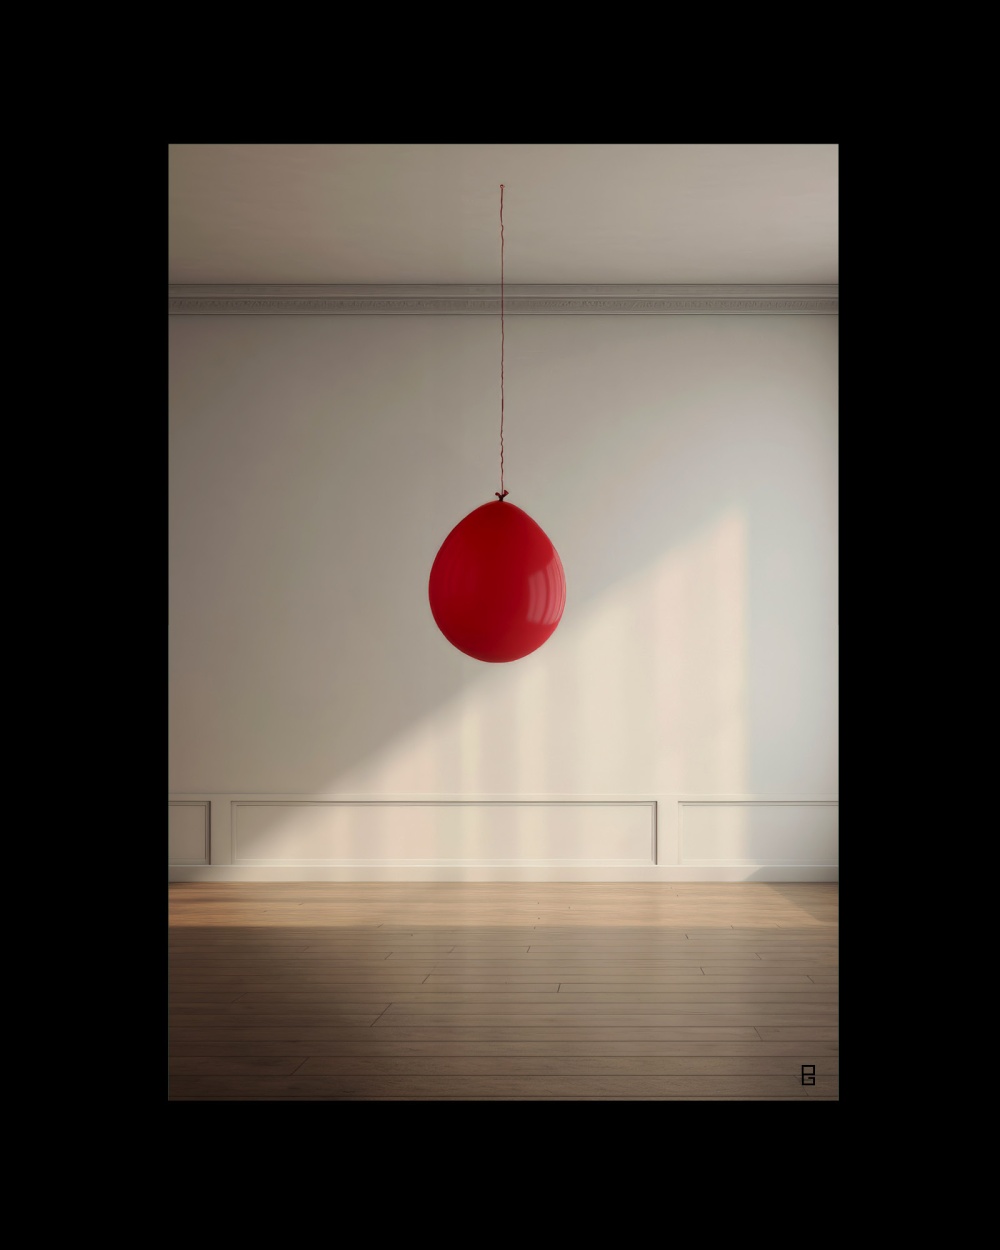 The balloon that hanged itself